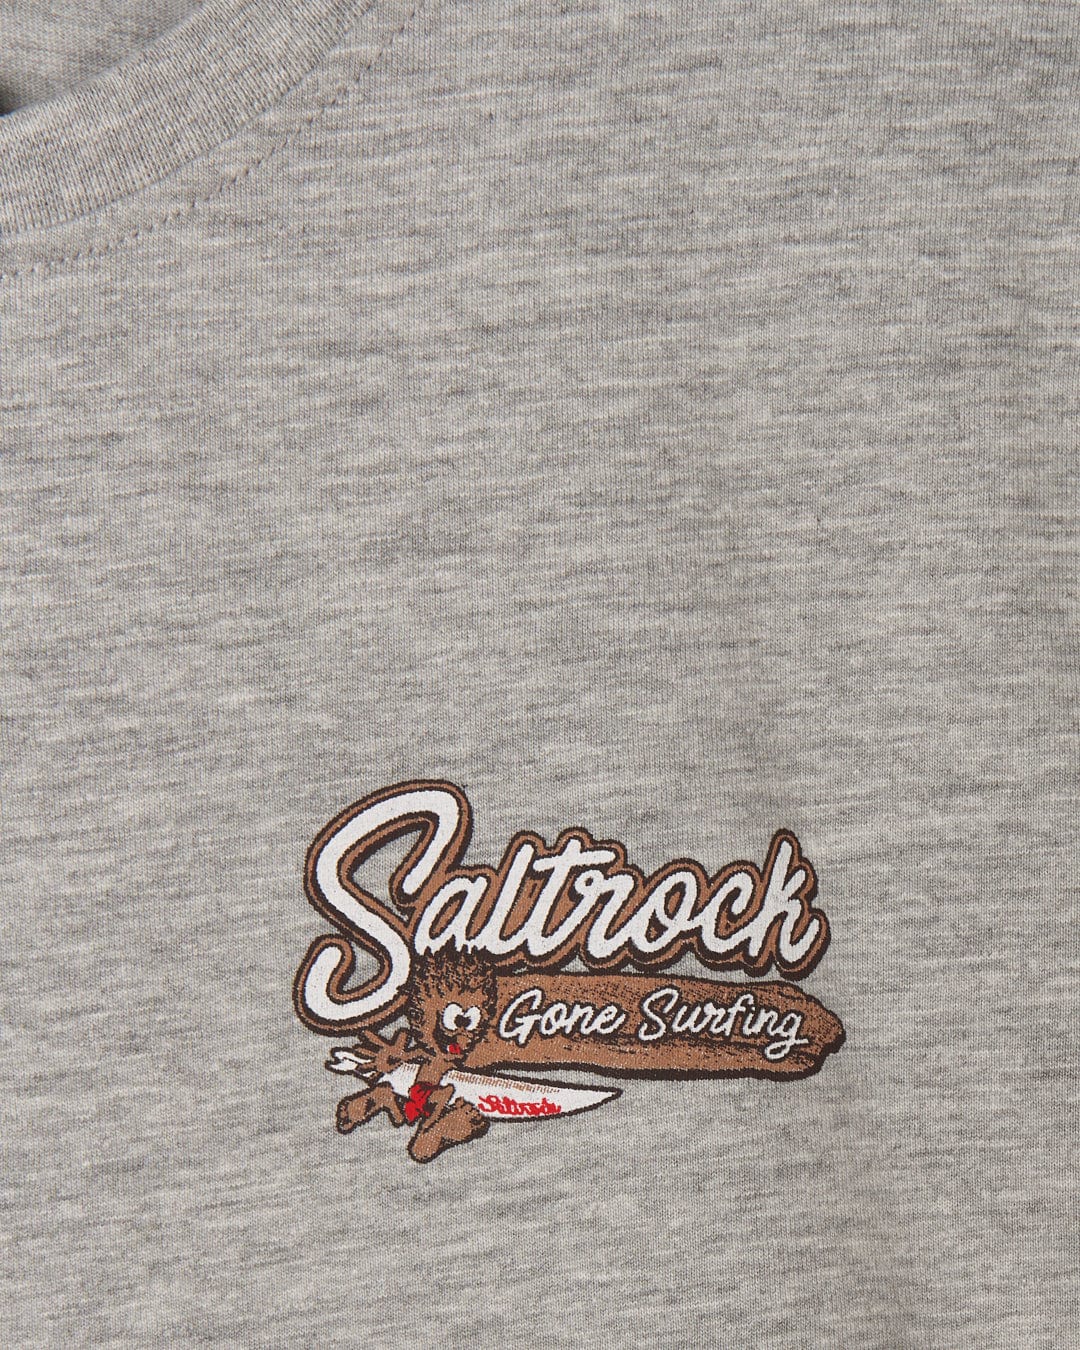 A gray Beach Signs Cornwall - Mens Short Sleeve T-Shirt - Grey Marl with a Saltrock branding logo in brown.